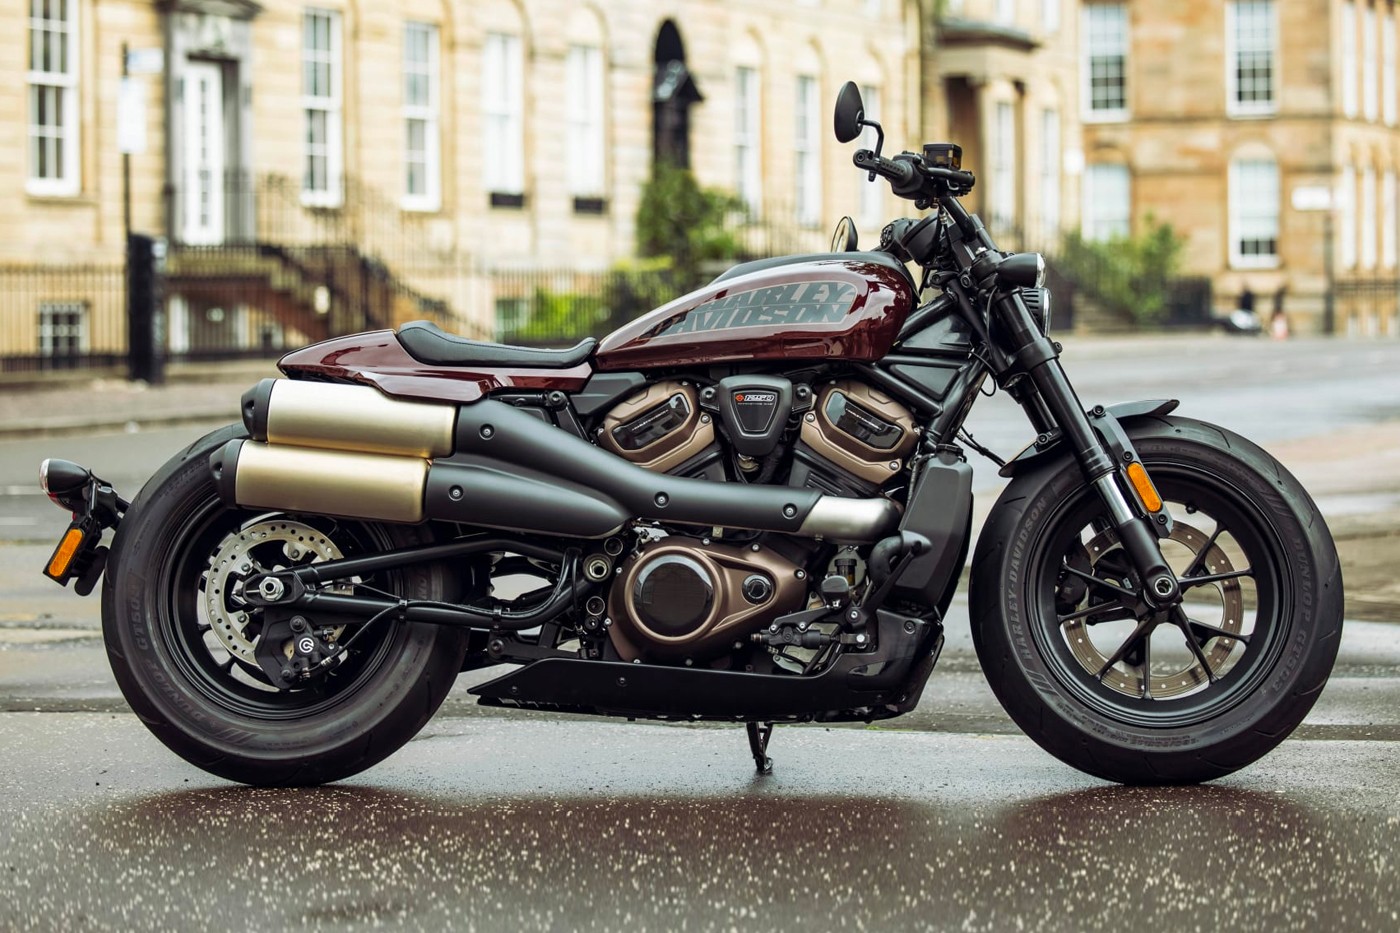 Harley Davidson 发表全新 2021 Sportster S 车款